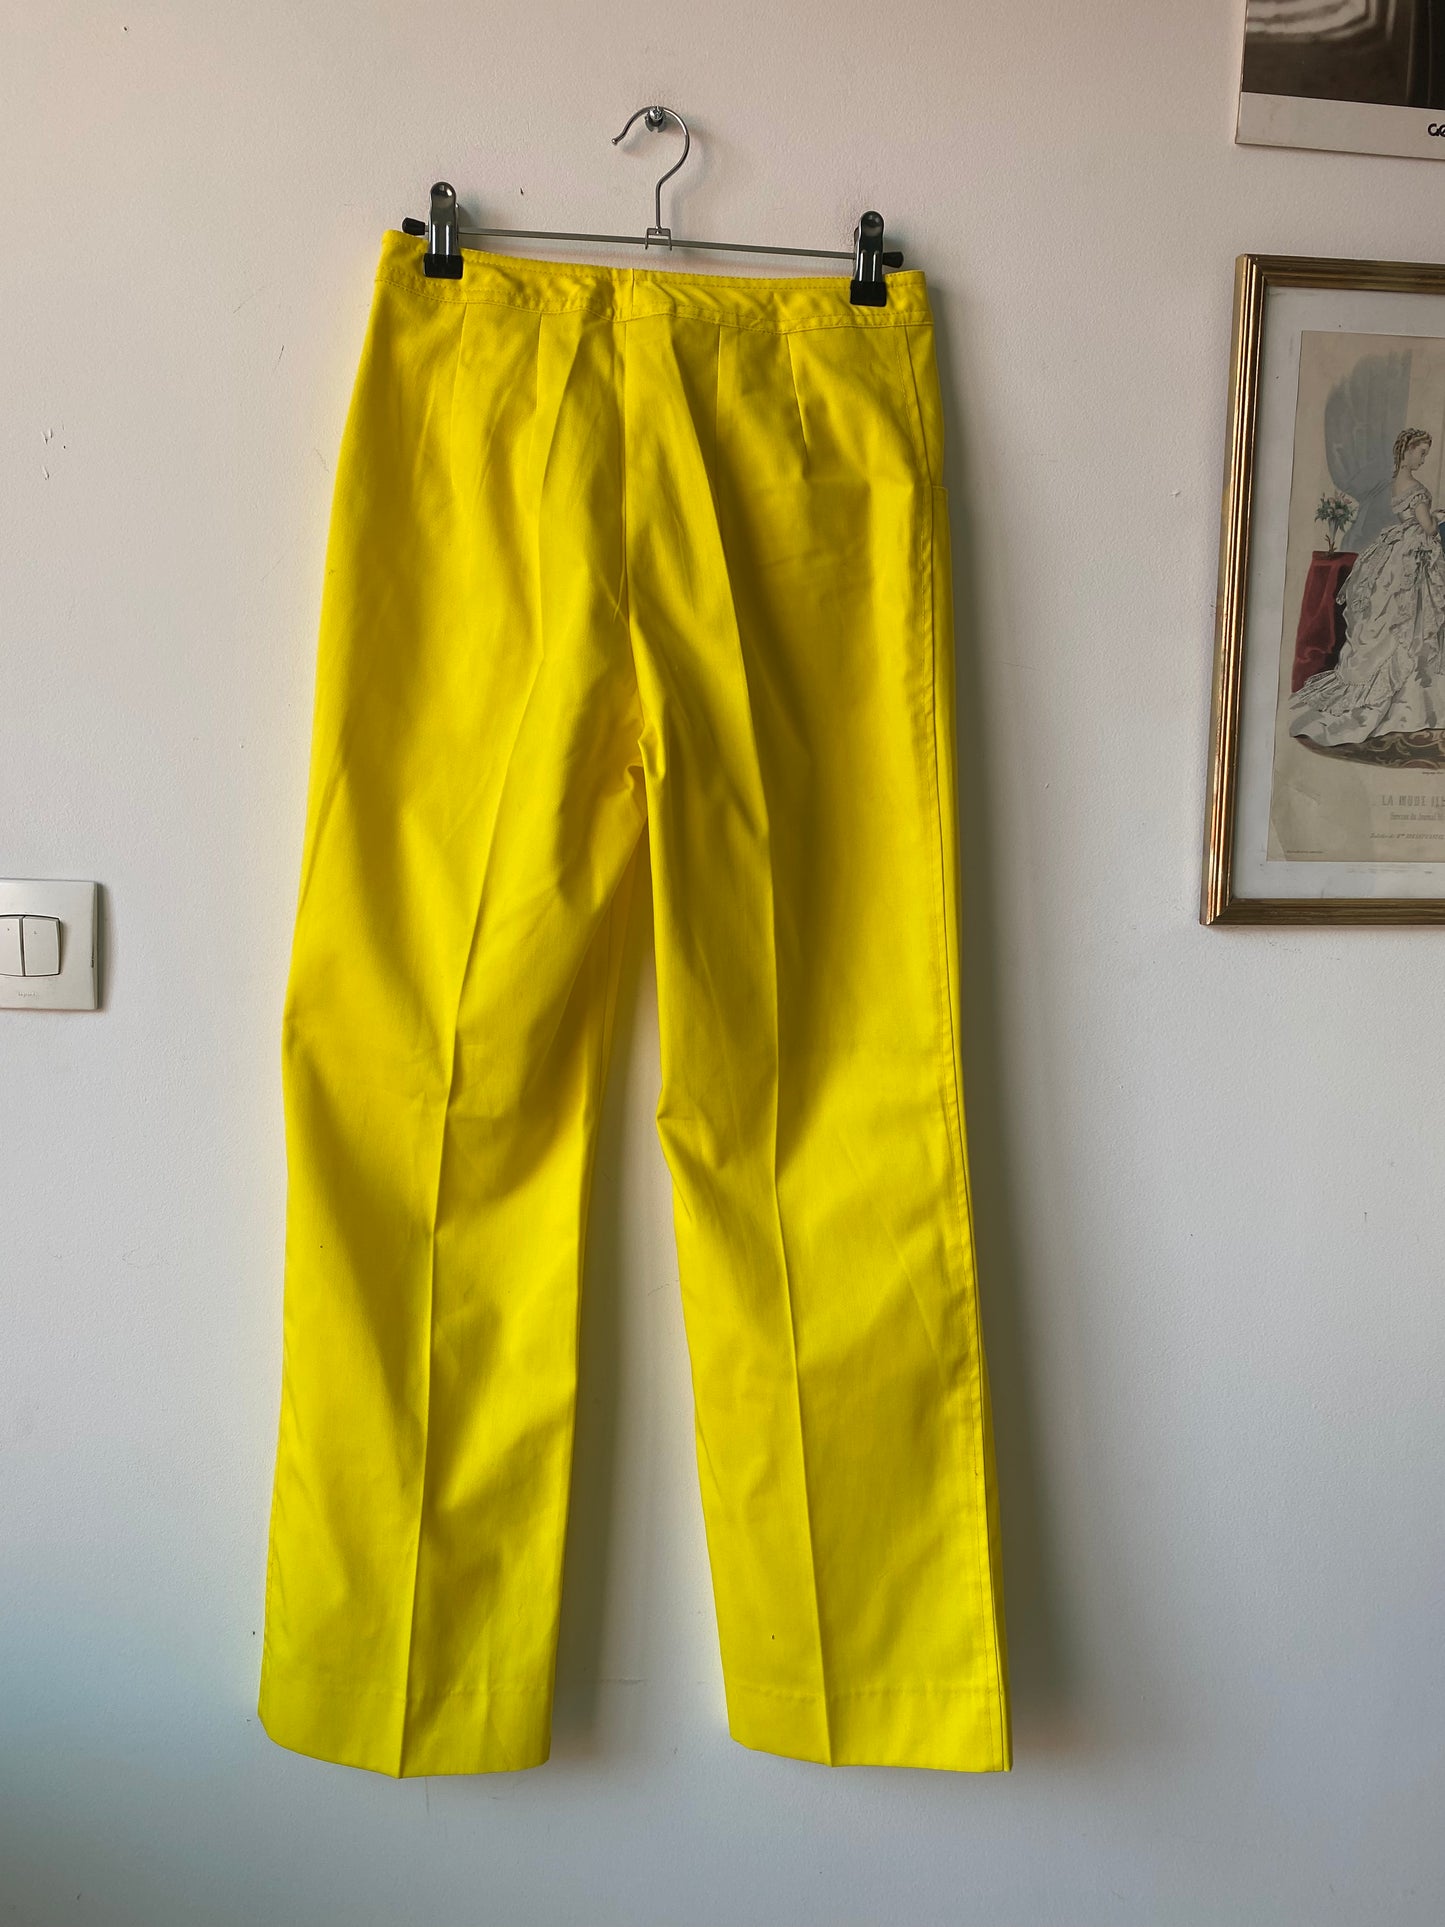 Pantalon jaune 70s